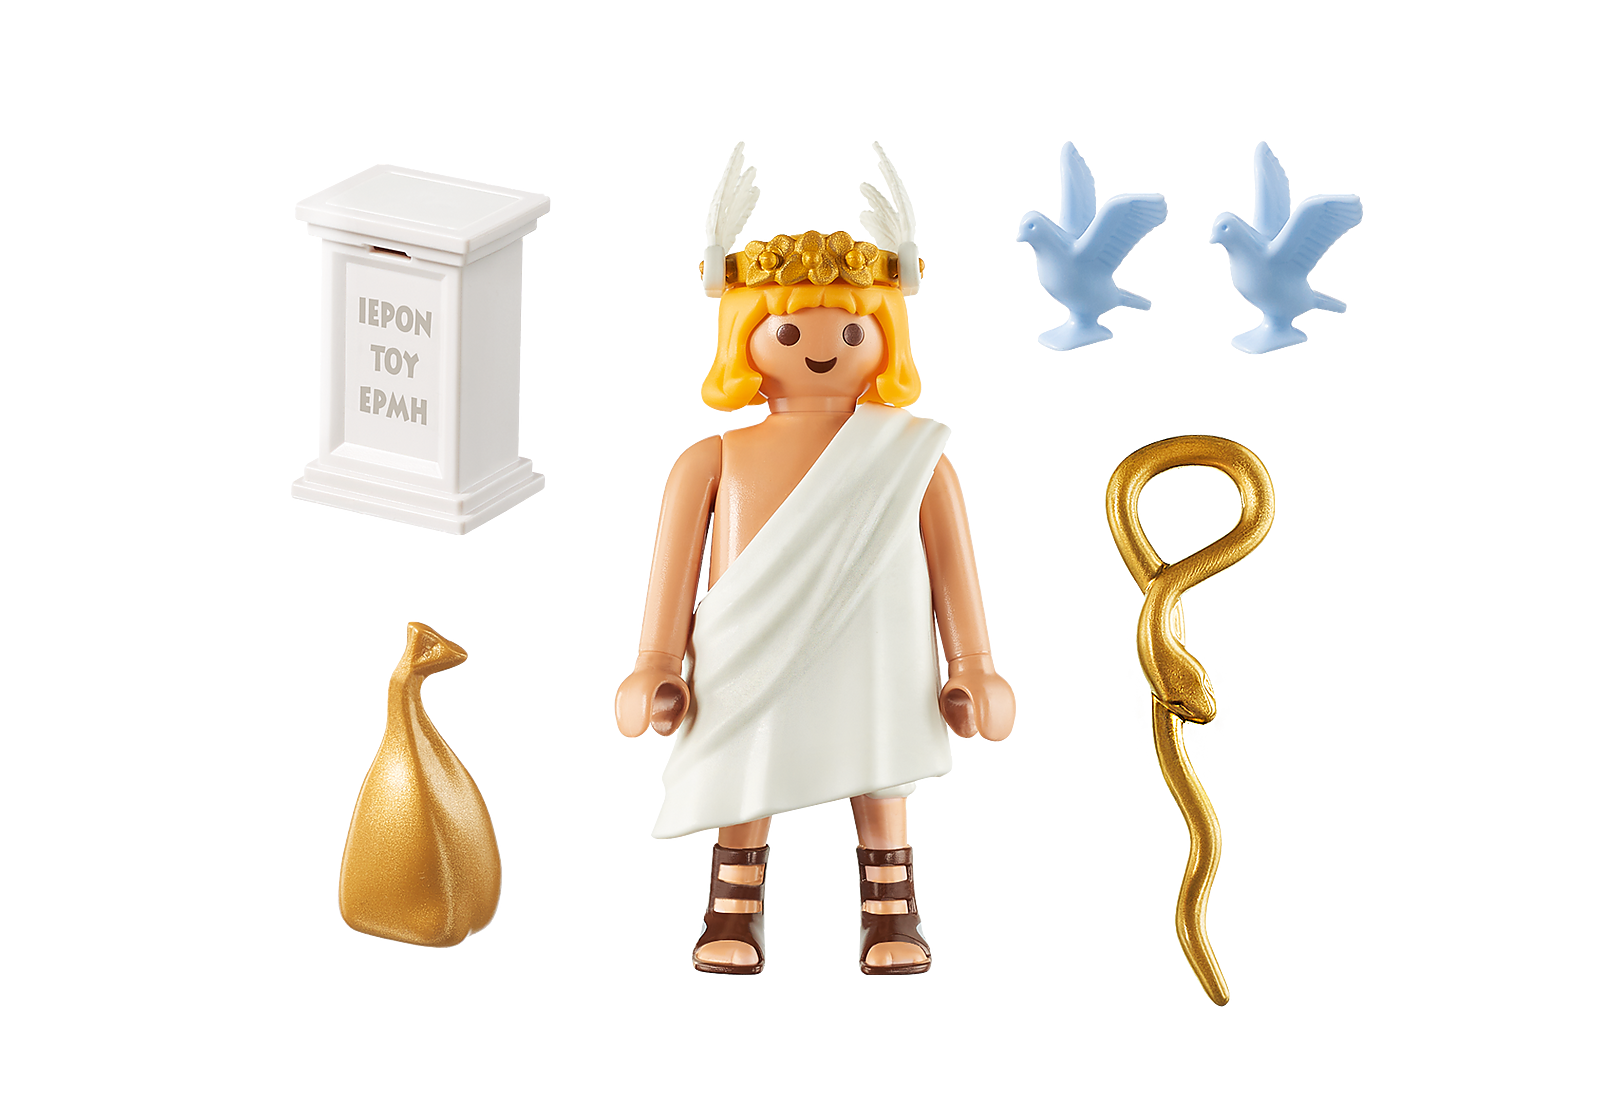 Playmobil History - Αρχαίοι Έλληνες Θεοί, Θεός Ερμής 9524